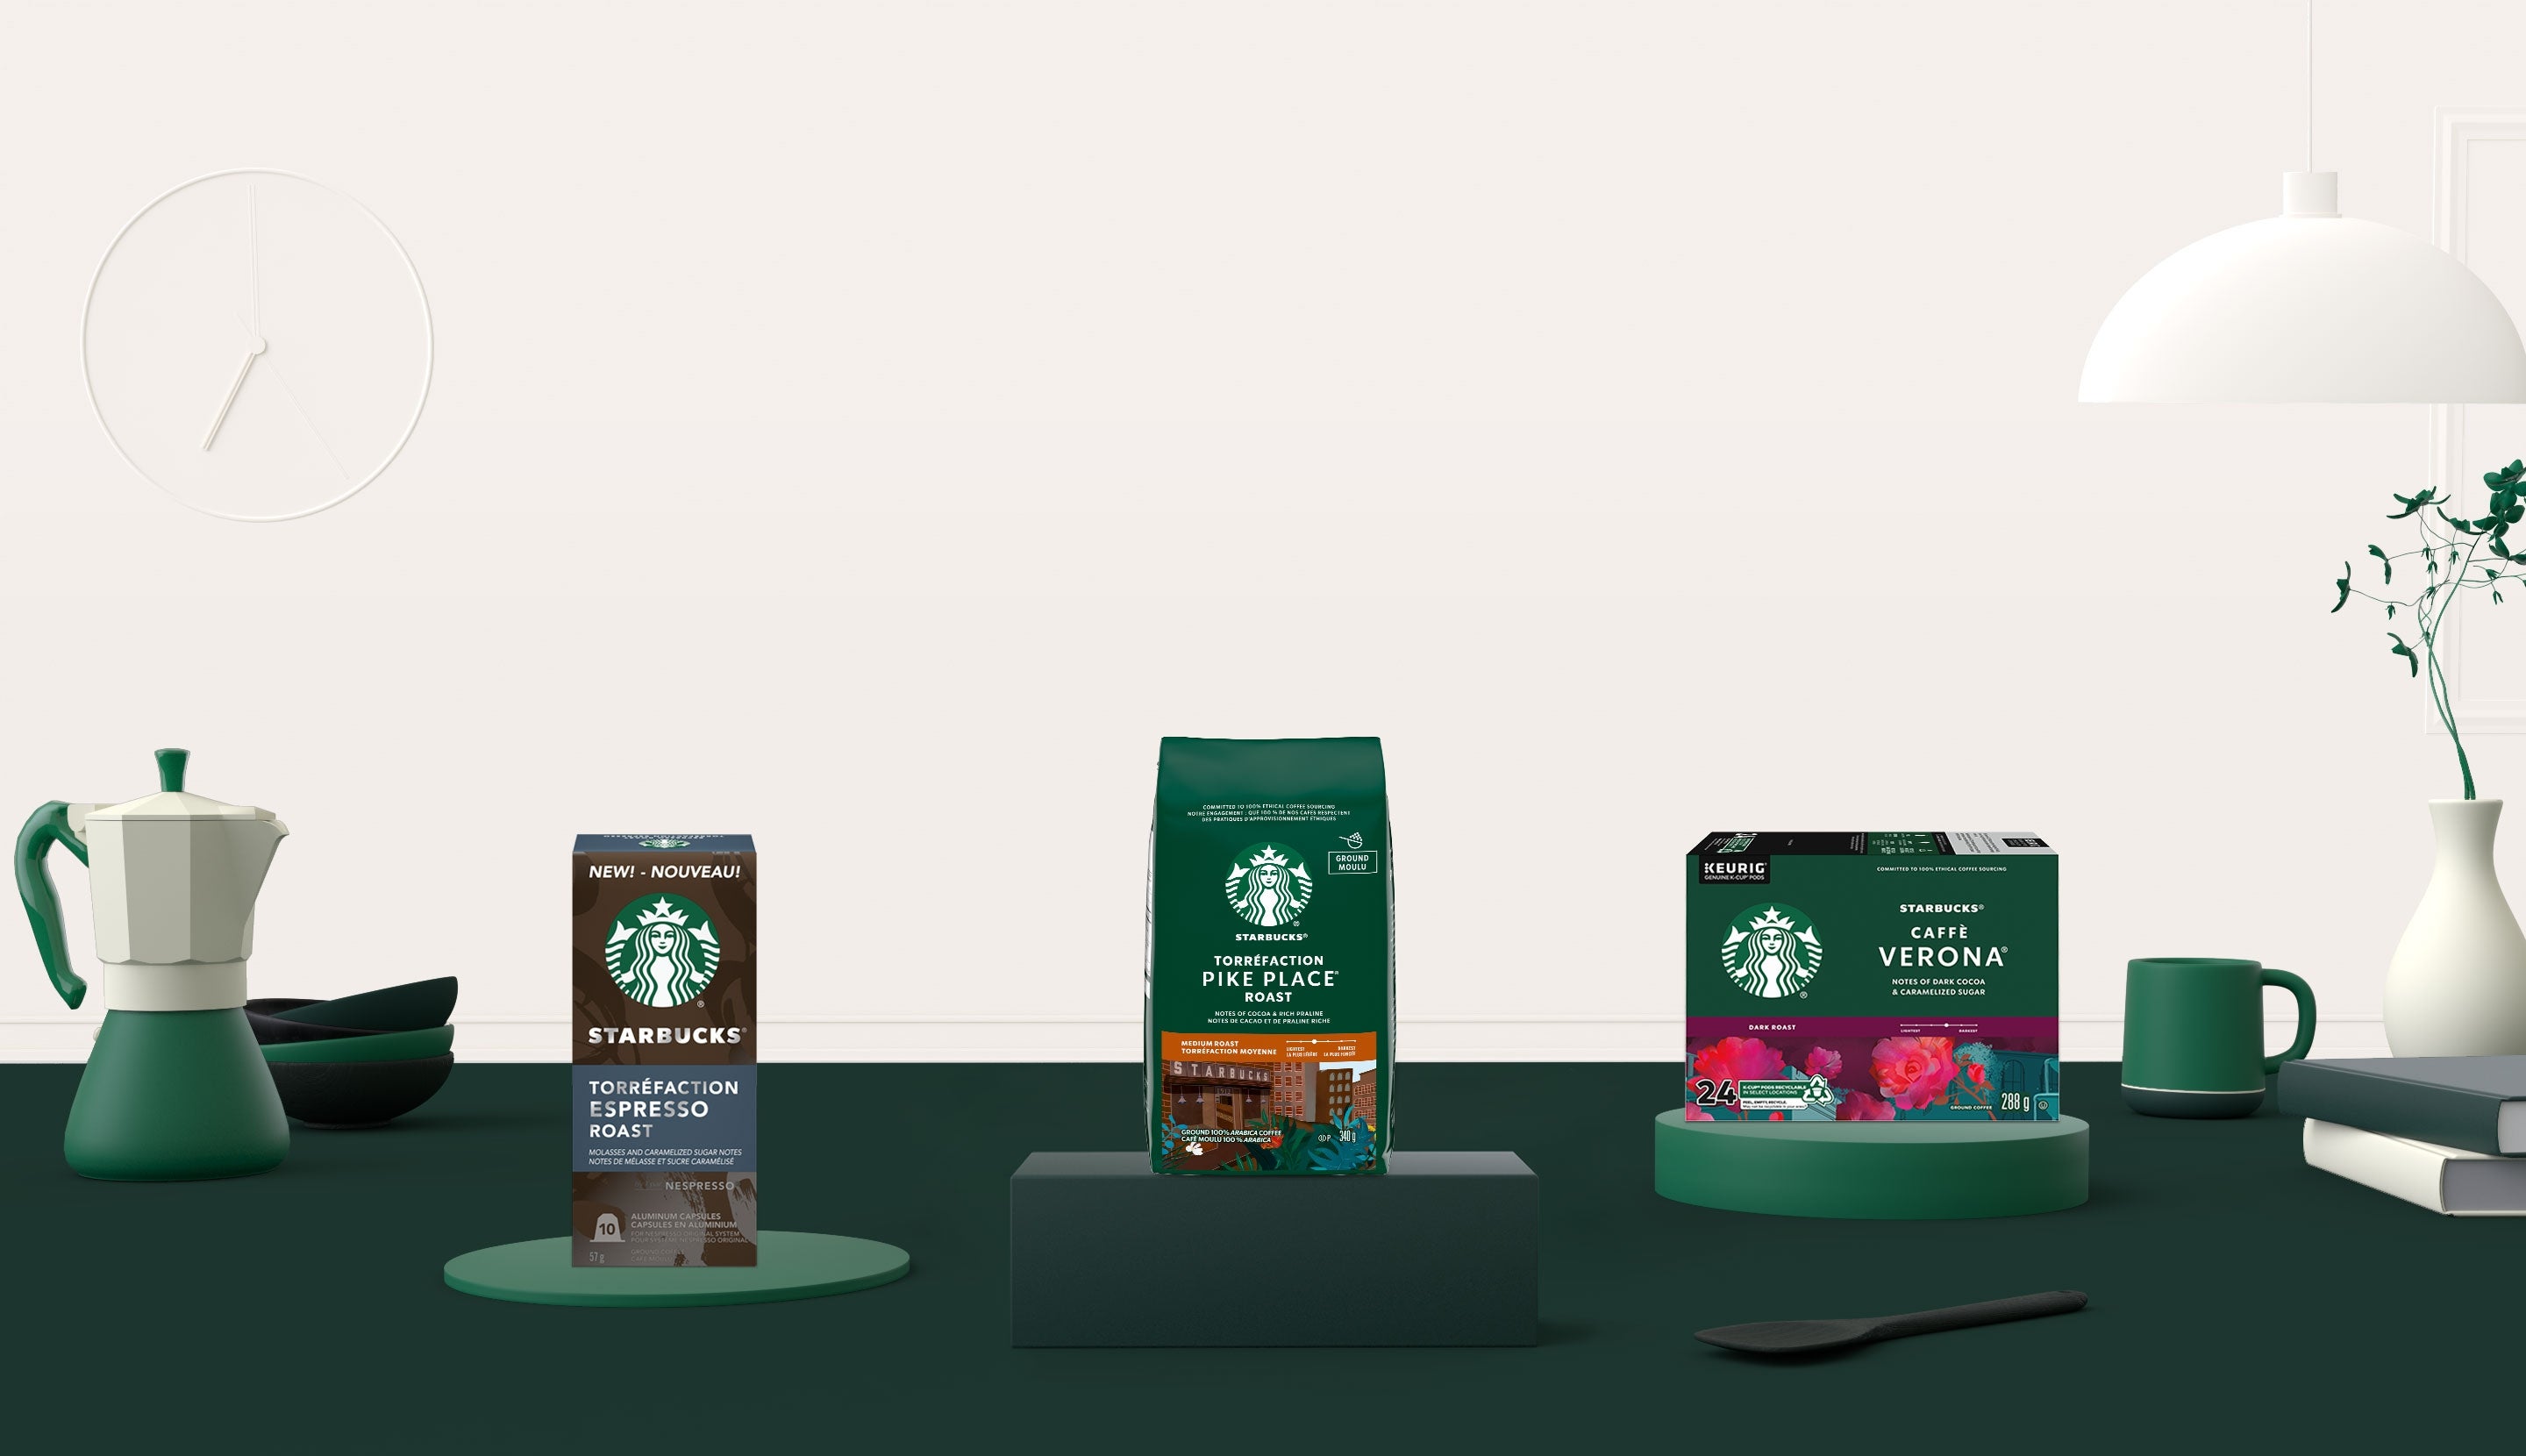 Nestlé and Starbucks® Launch a new Range of Starbucks Capsules for Nespresso  Vertuo